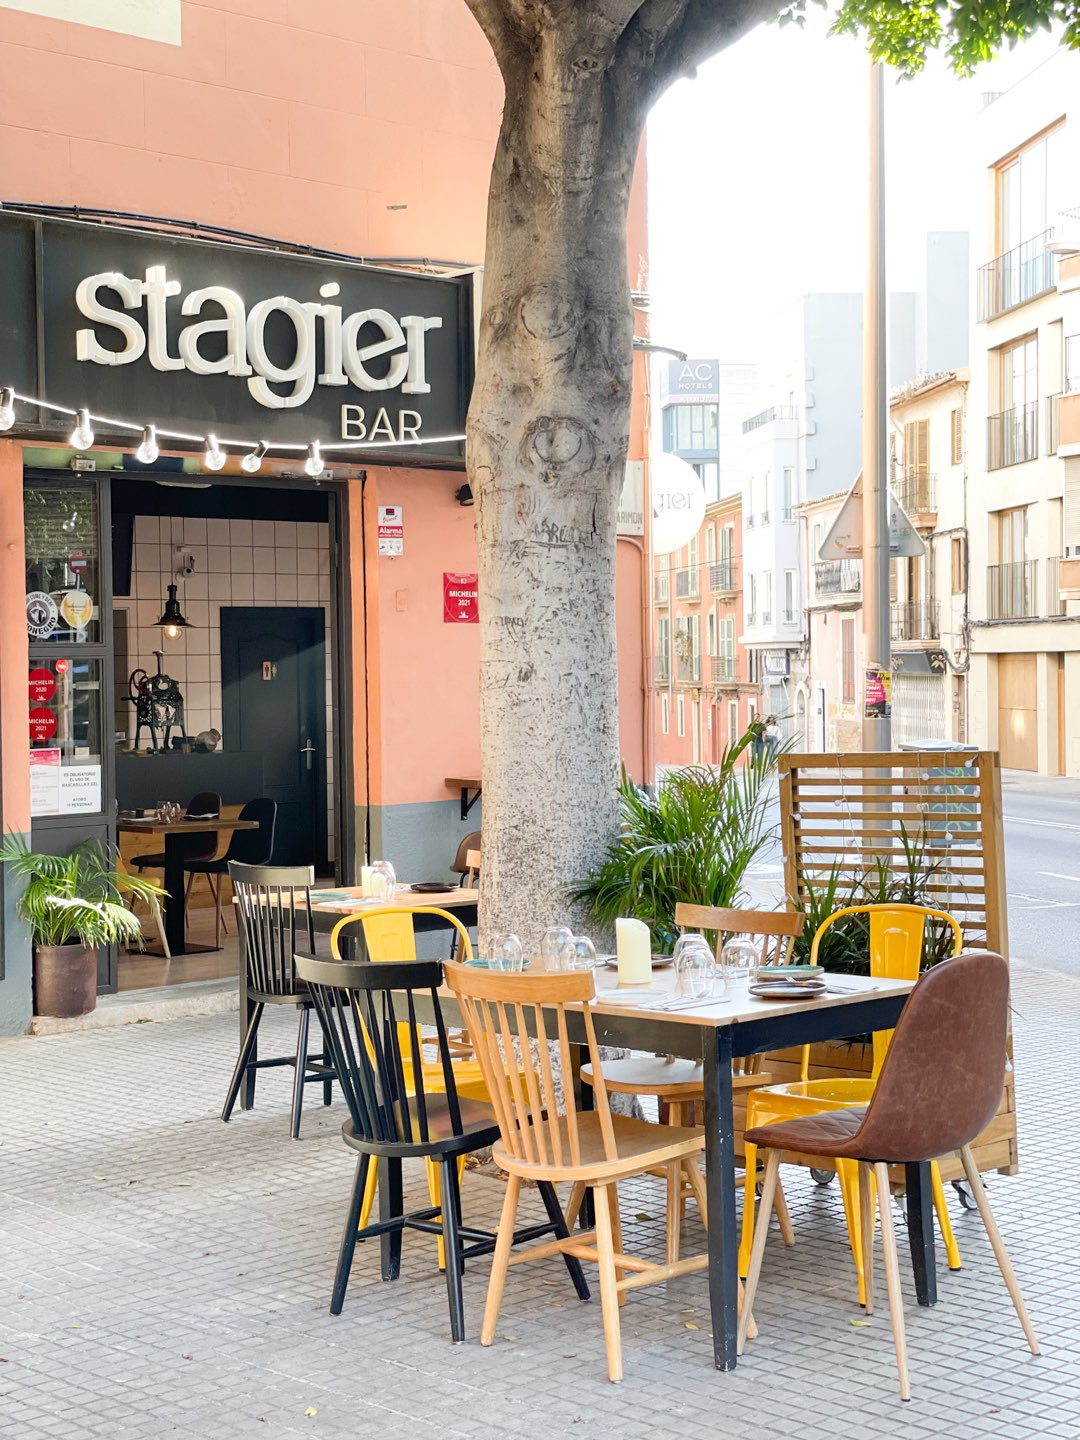 Stagier Bar in Palma de Mallorca